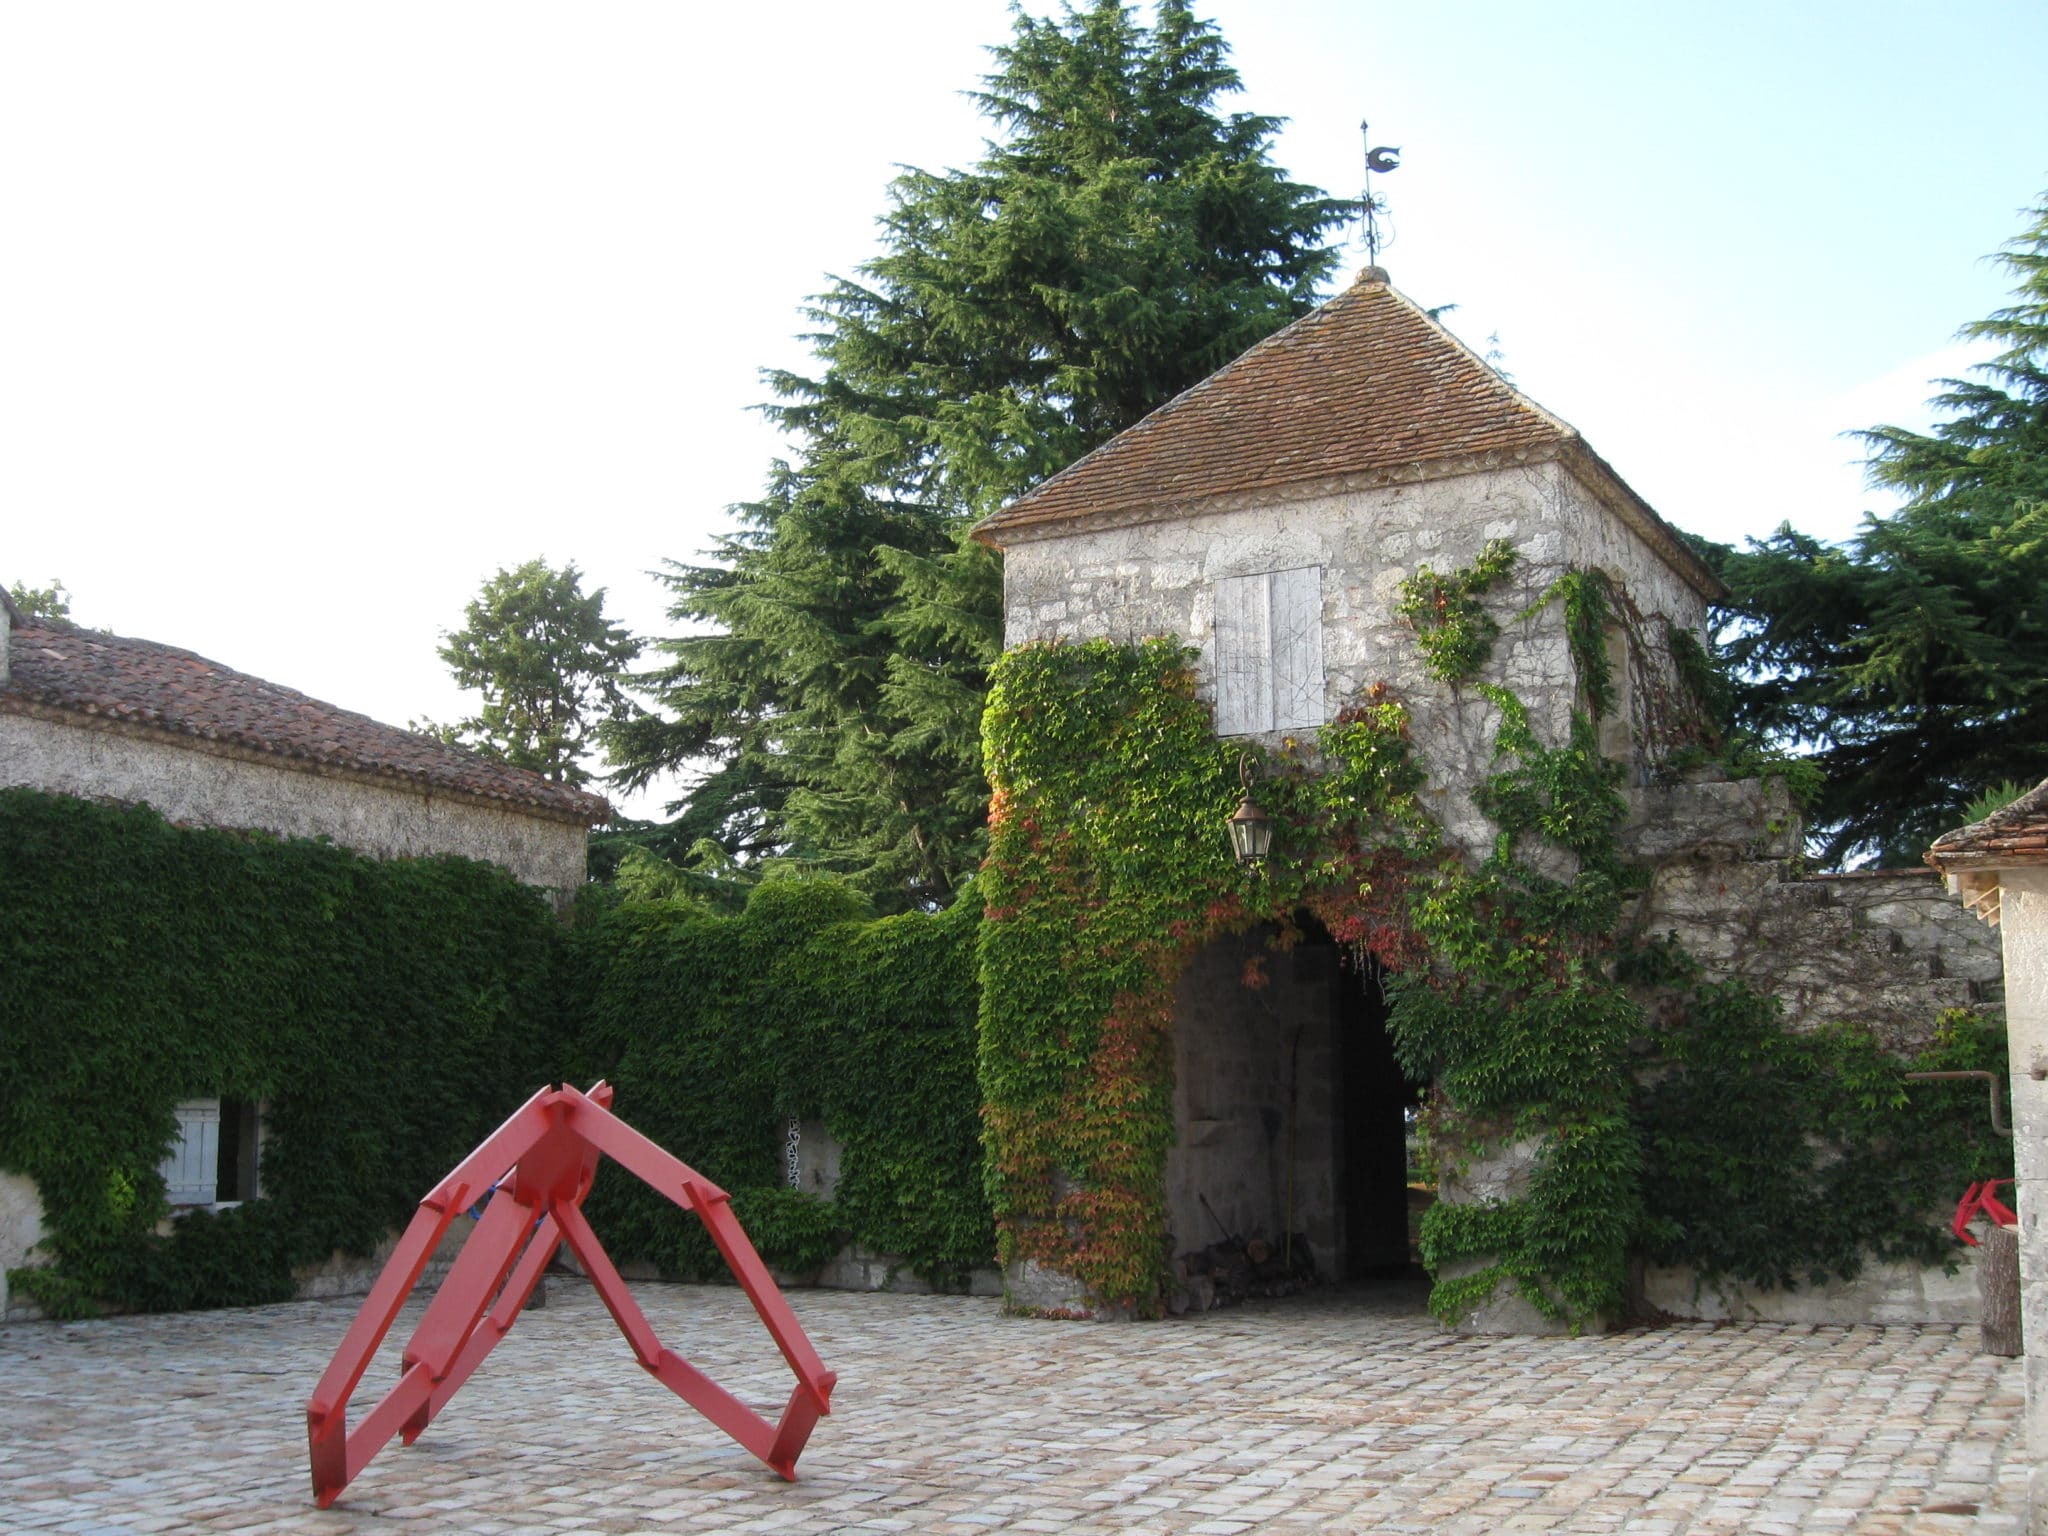 Courtyard at Bordeaux home of Pierre Clerk and Linda Mandel